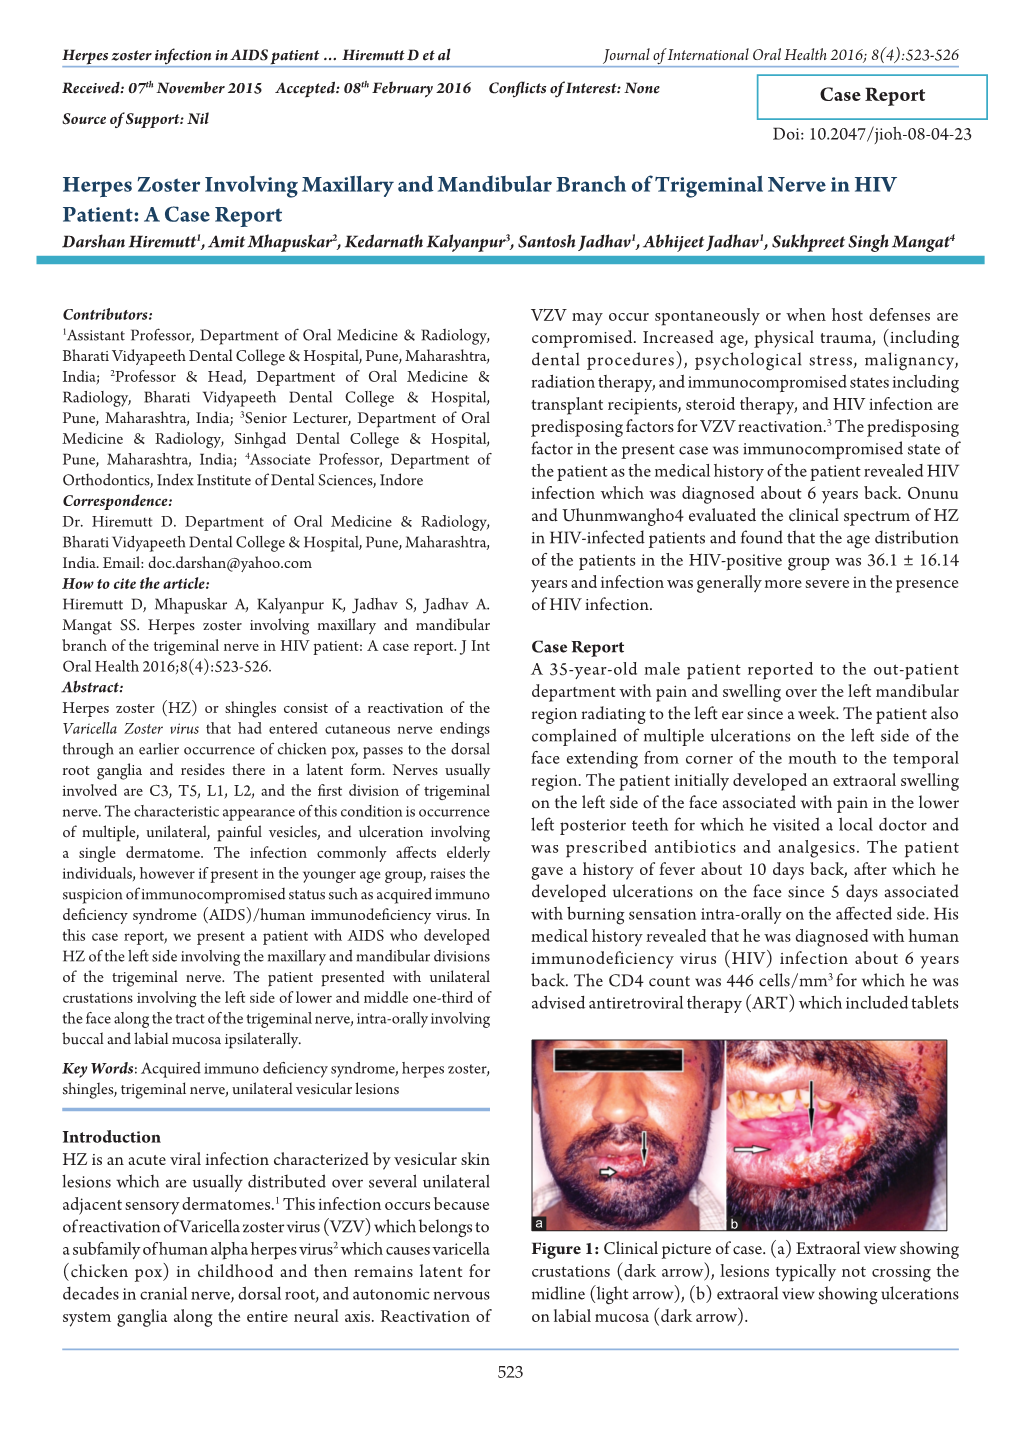 Herpes Zoster Involving Maxillary and Mandibular Branch of Trigeminal